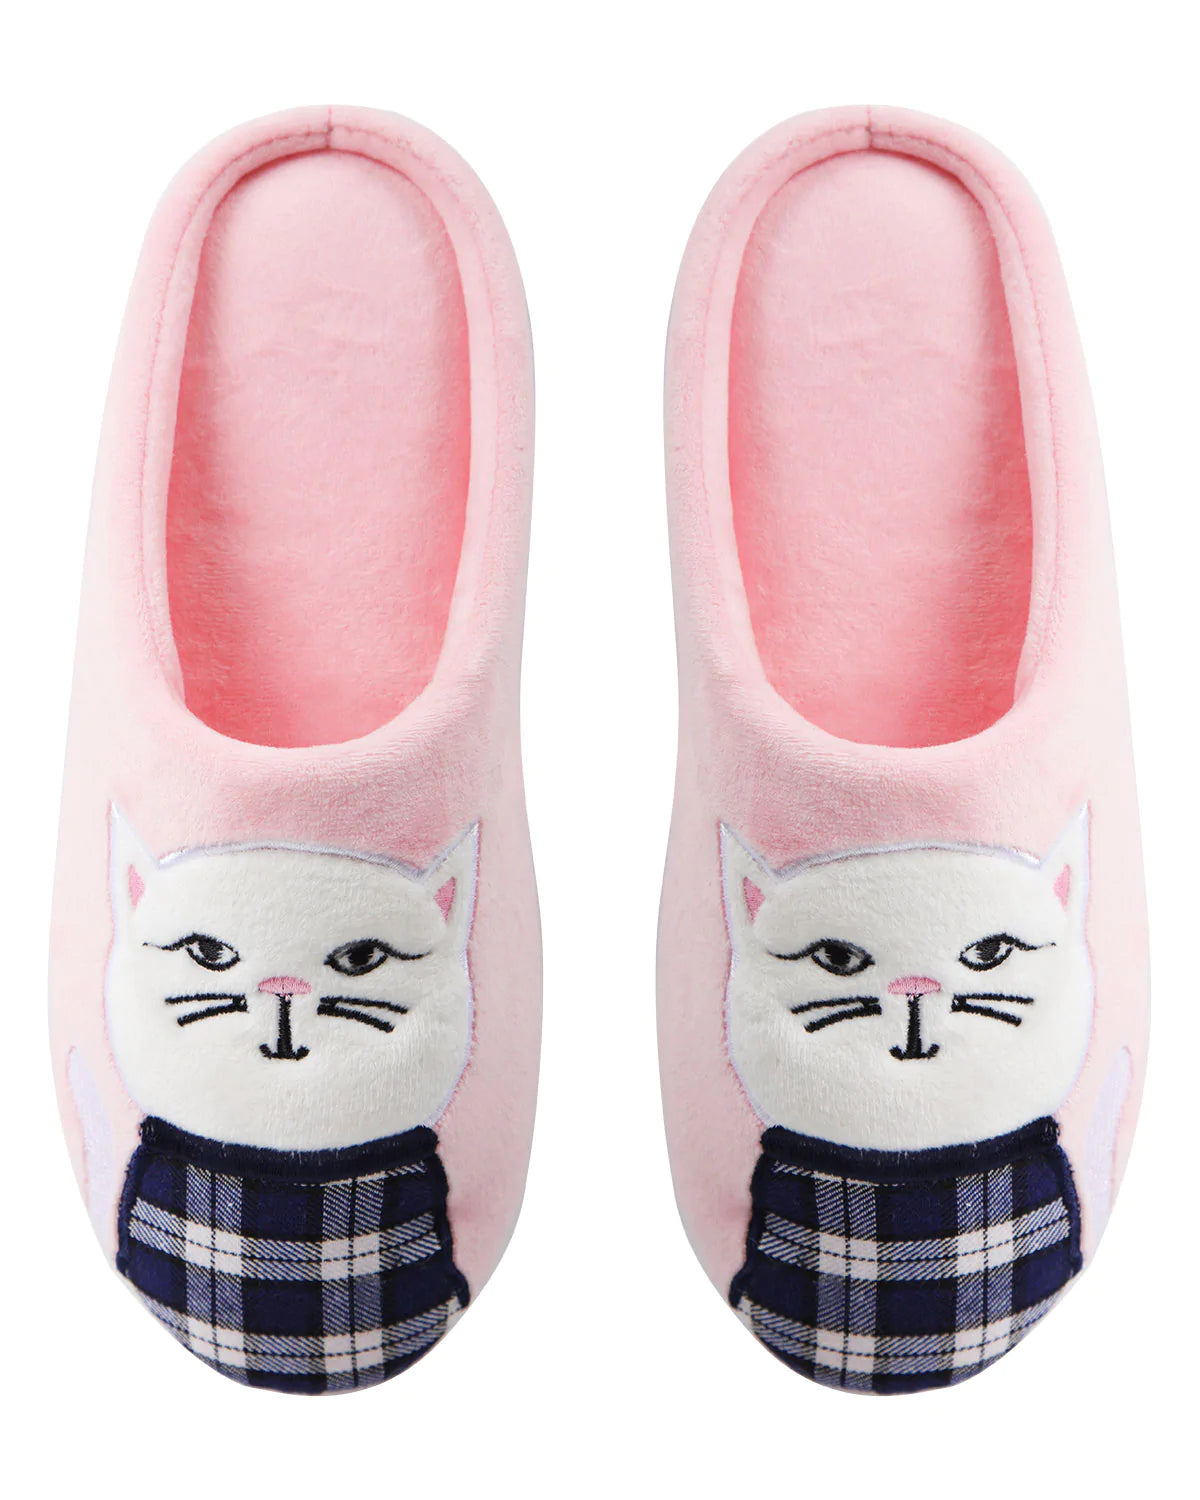 Plaid Cat Plush Slipper, Pink, S